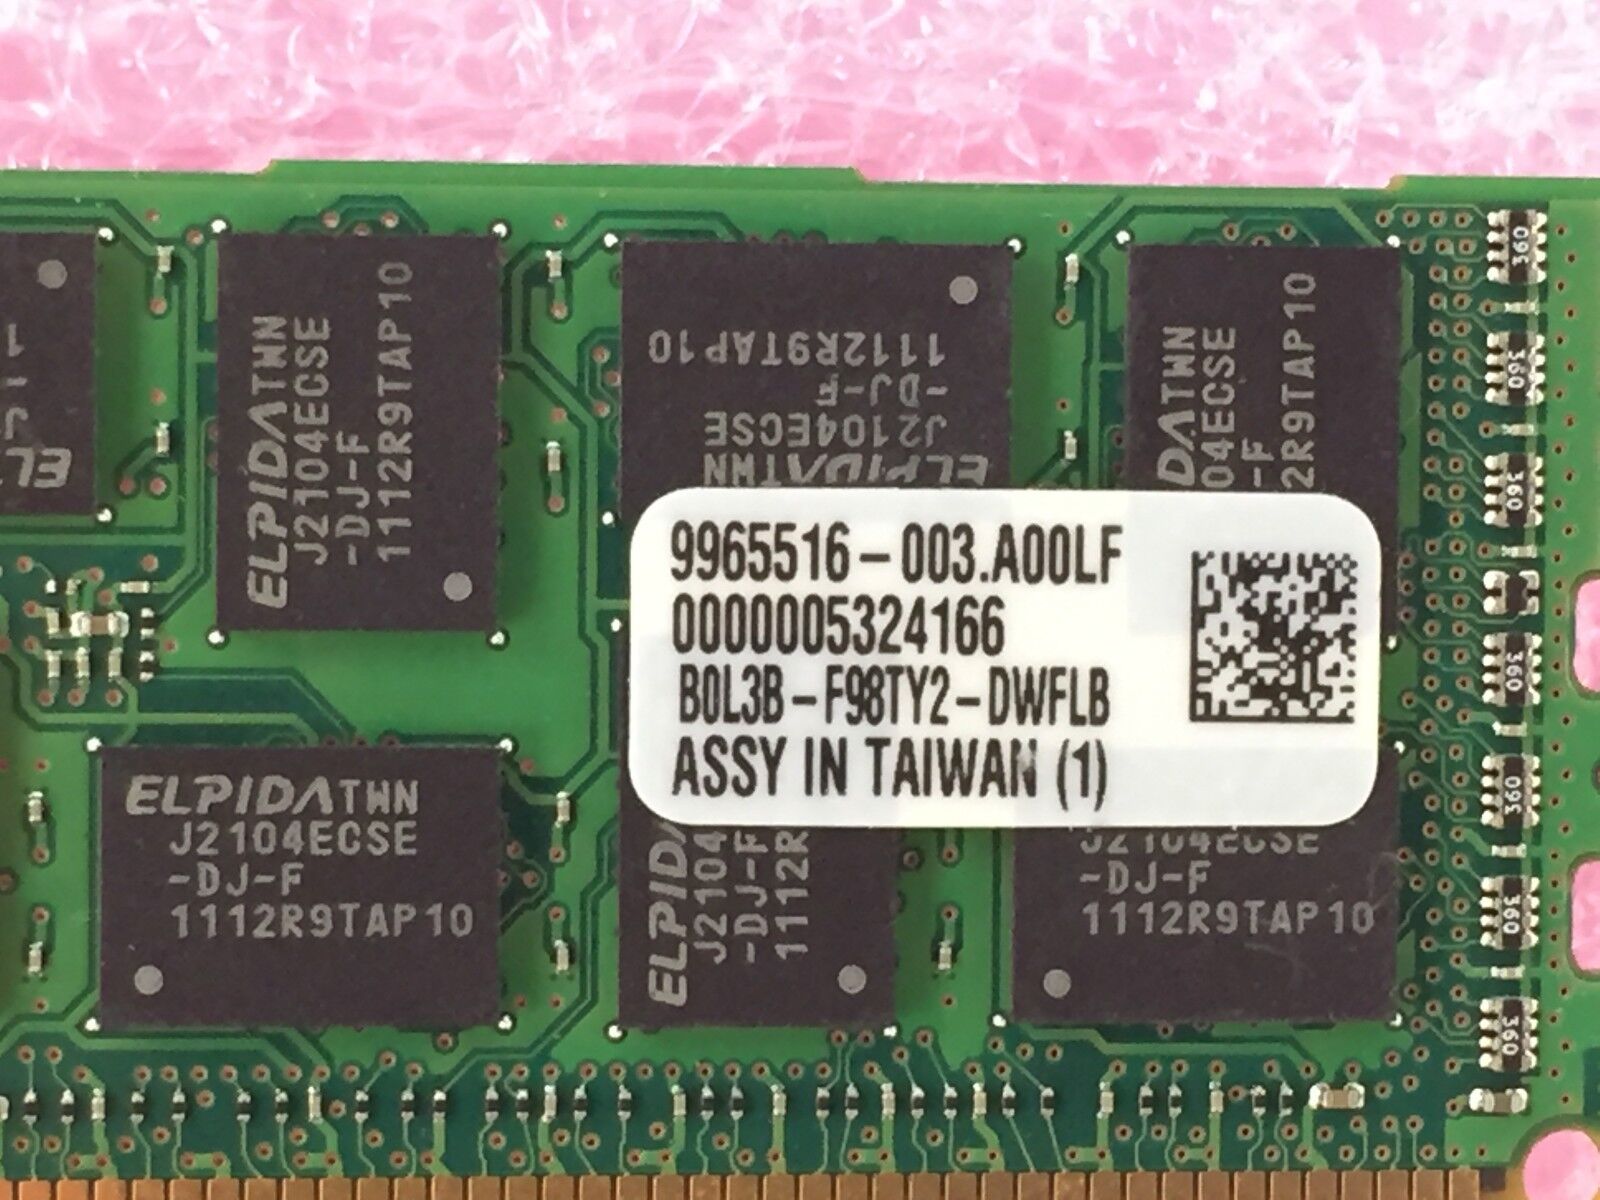 Kingston 8GB 240-Pin DDR3 SDRAM DDR3 1333 (PC3 10600) KCS-B200A/8G